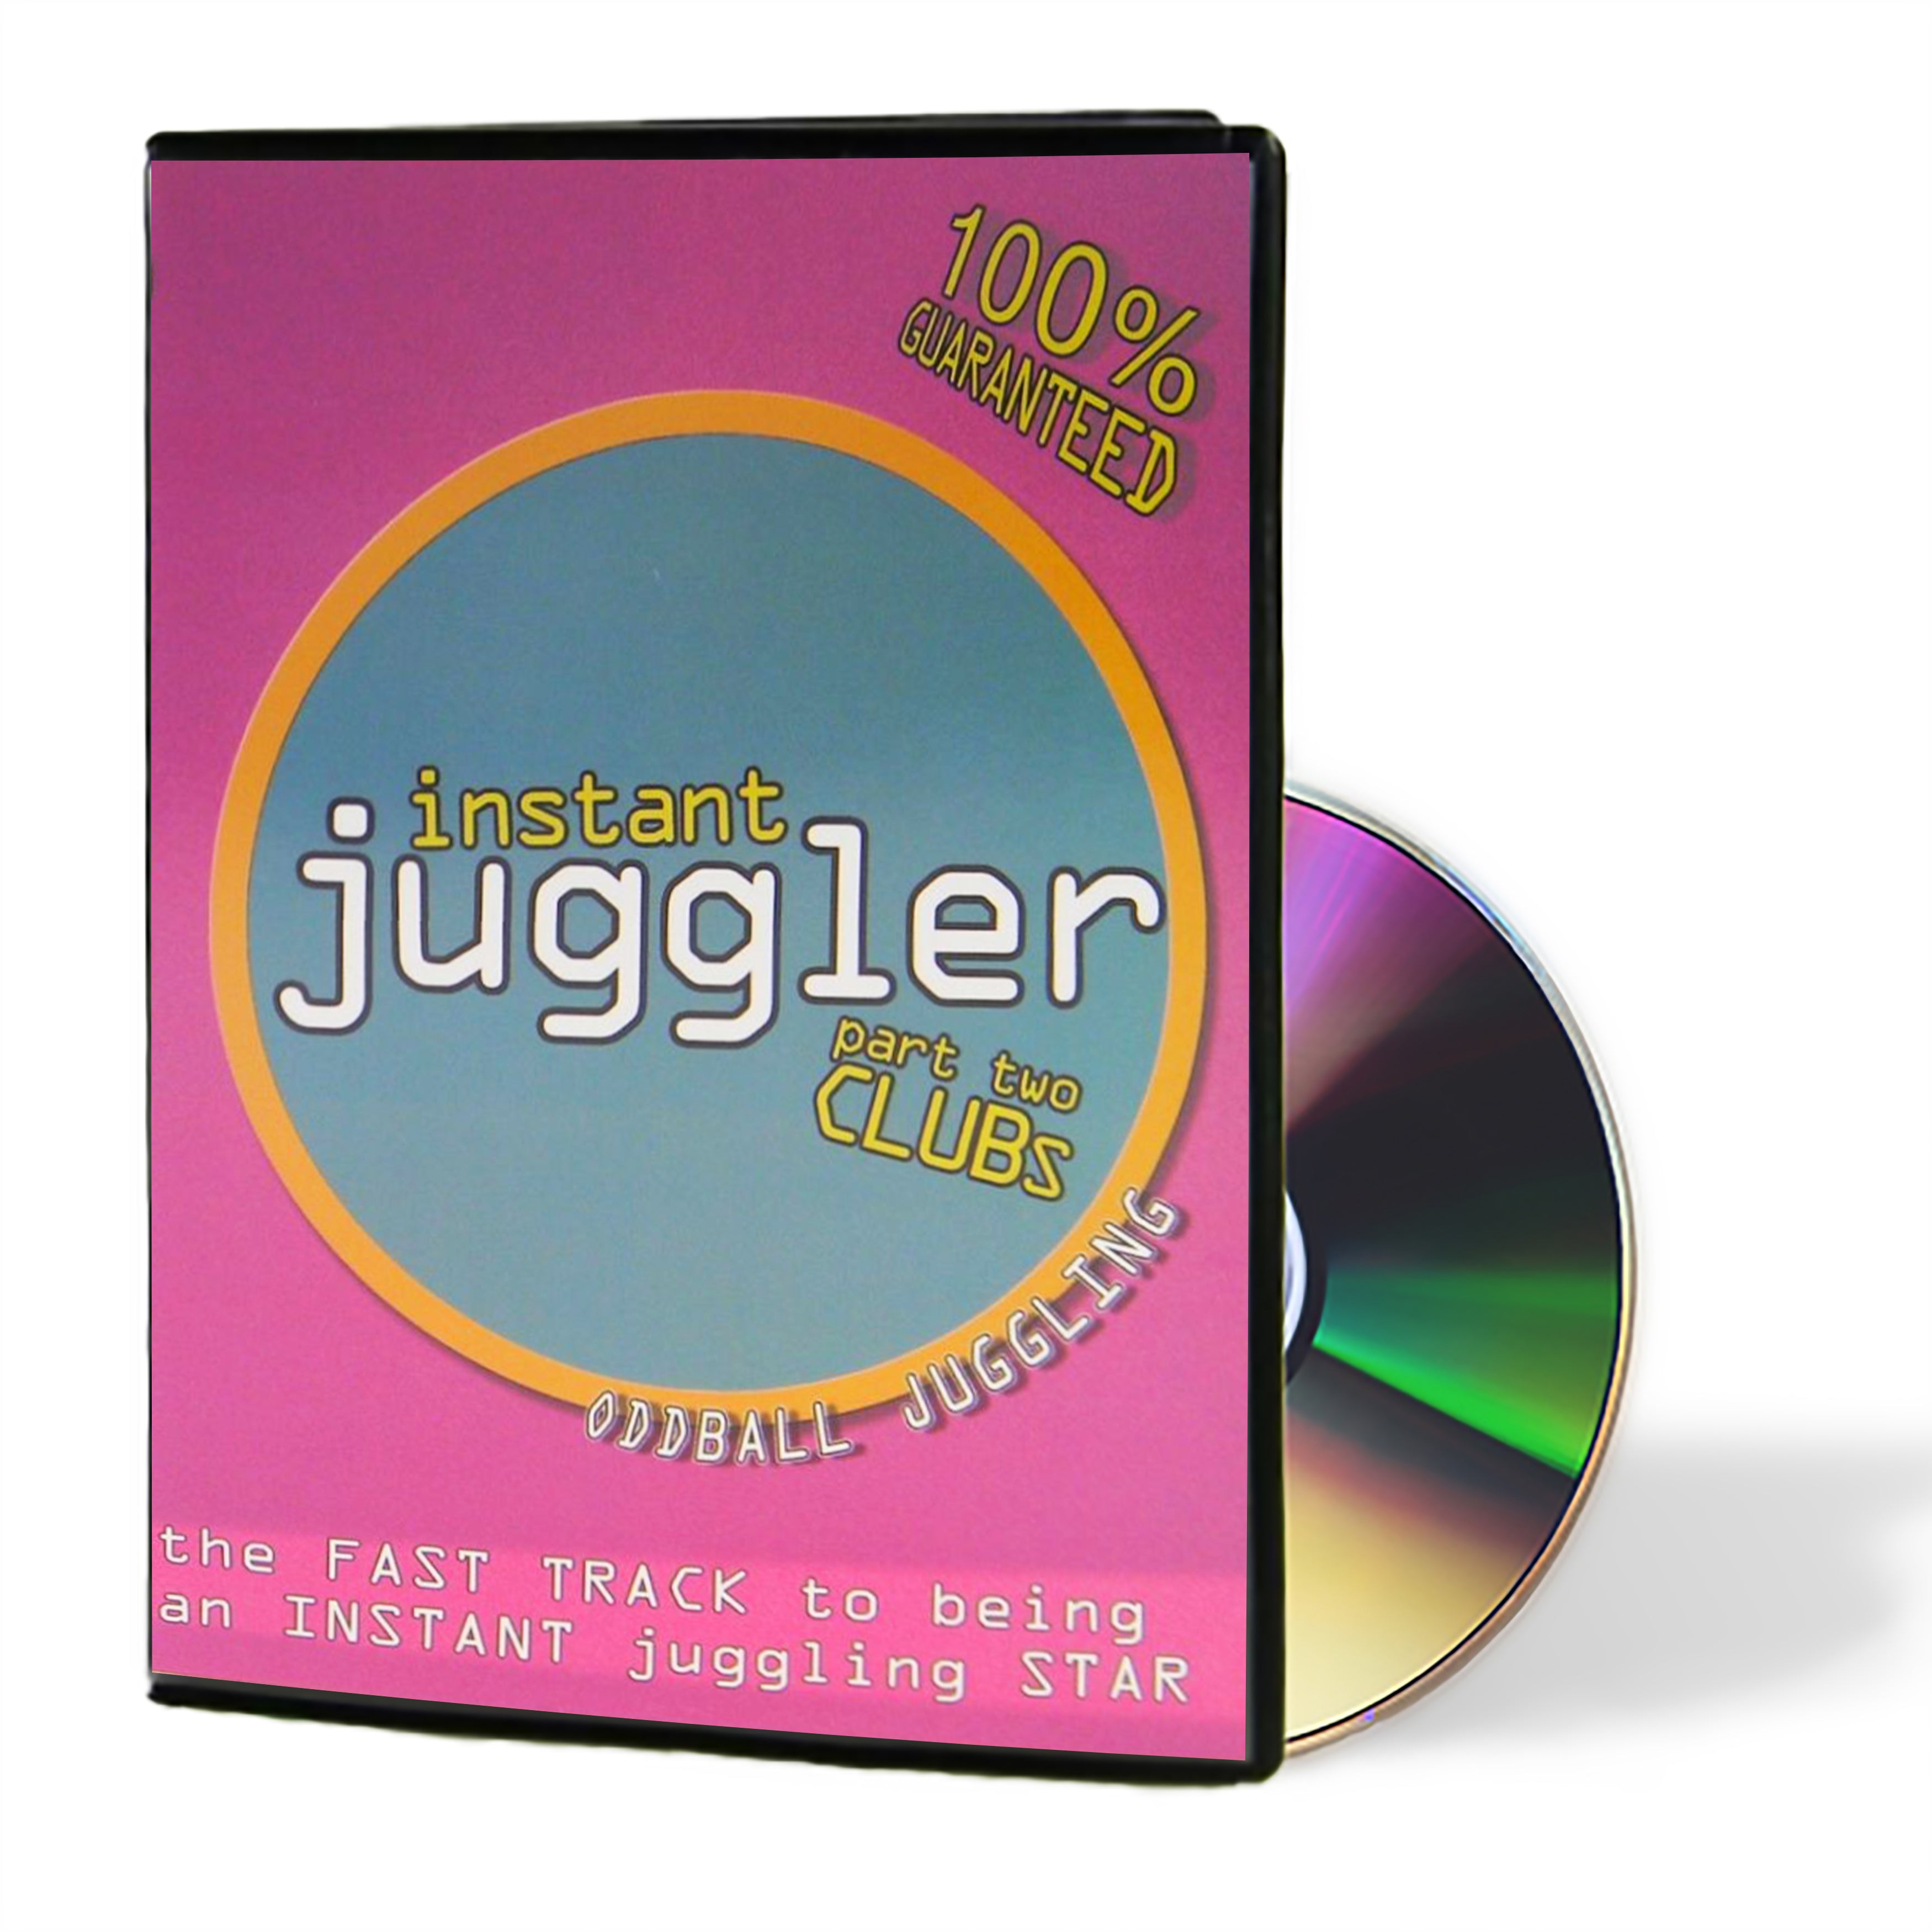 Oddballs Instant Juggler DVD - part two - Clubs